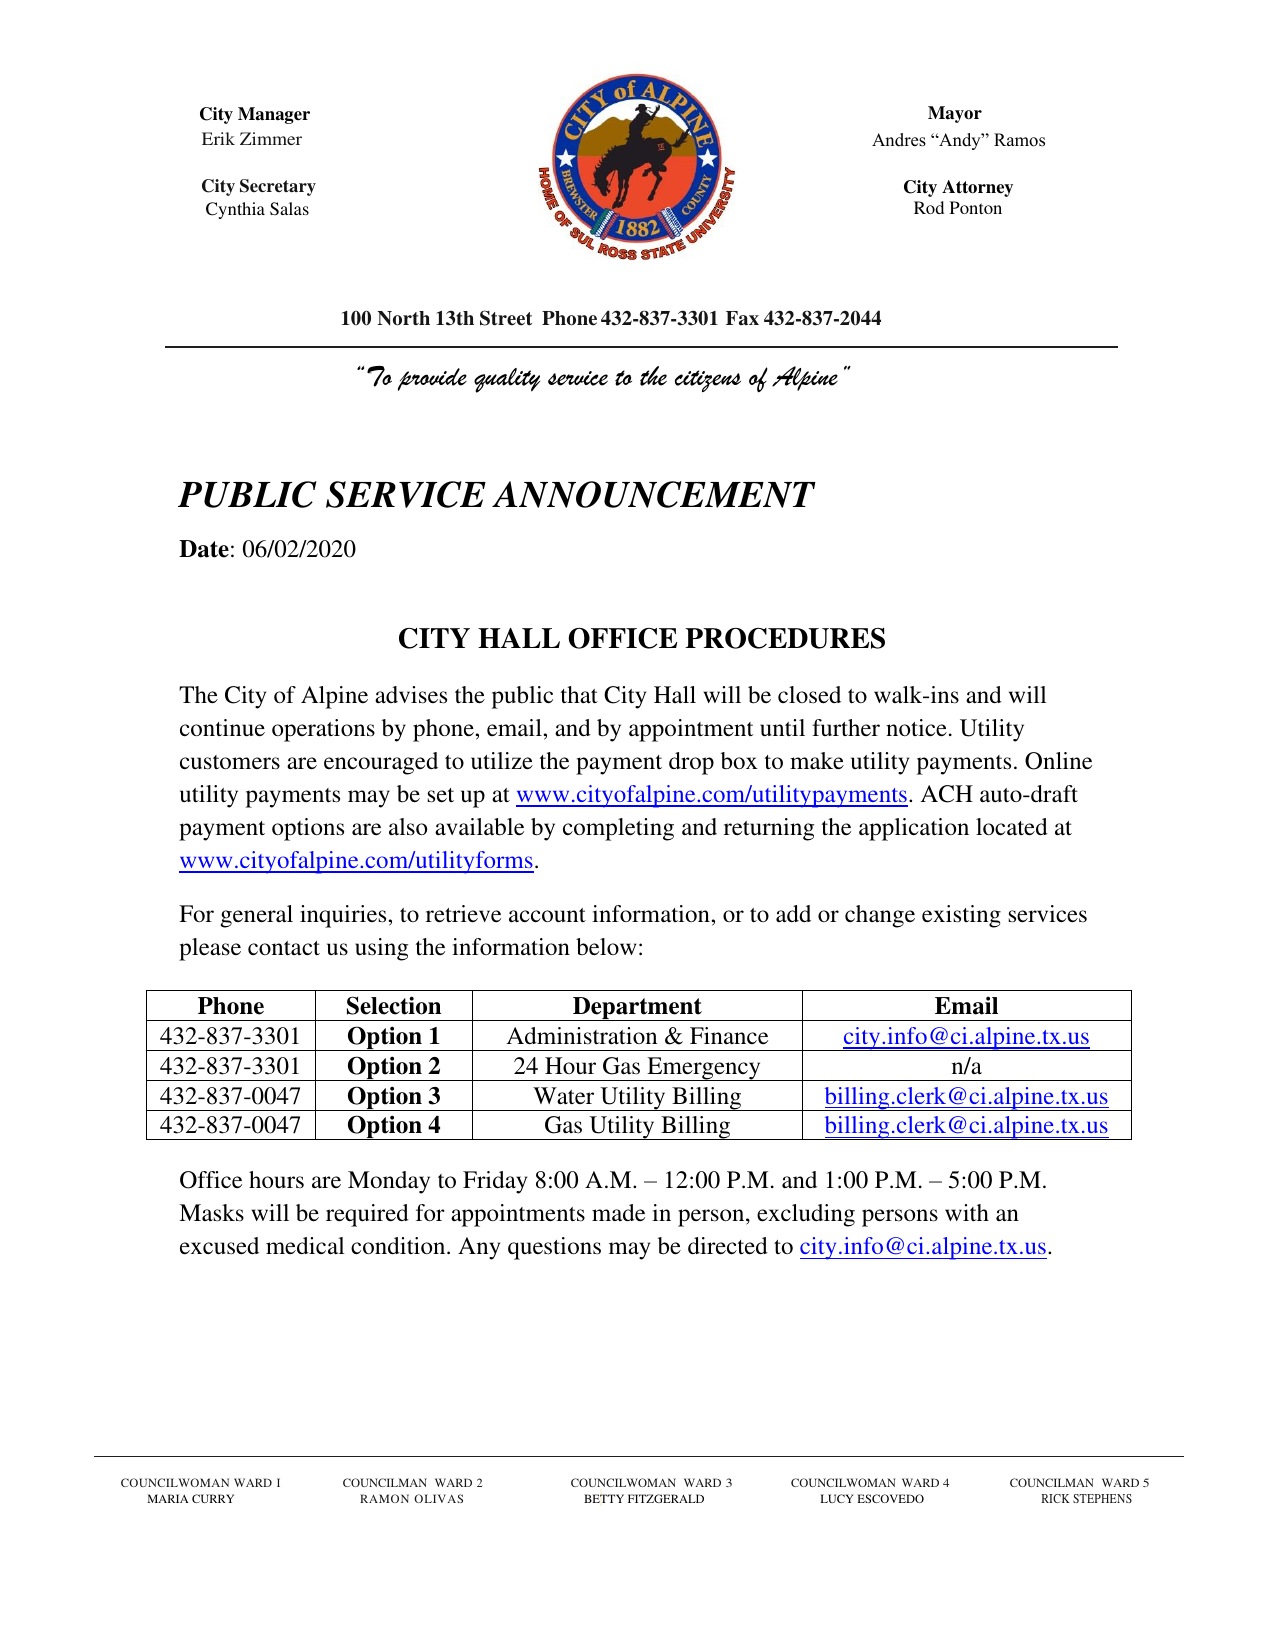 City Hall Office Procedures